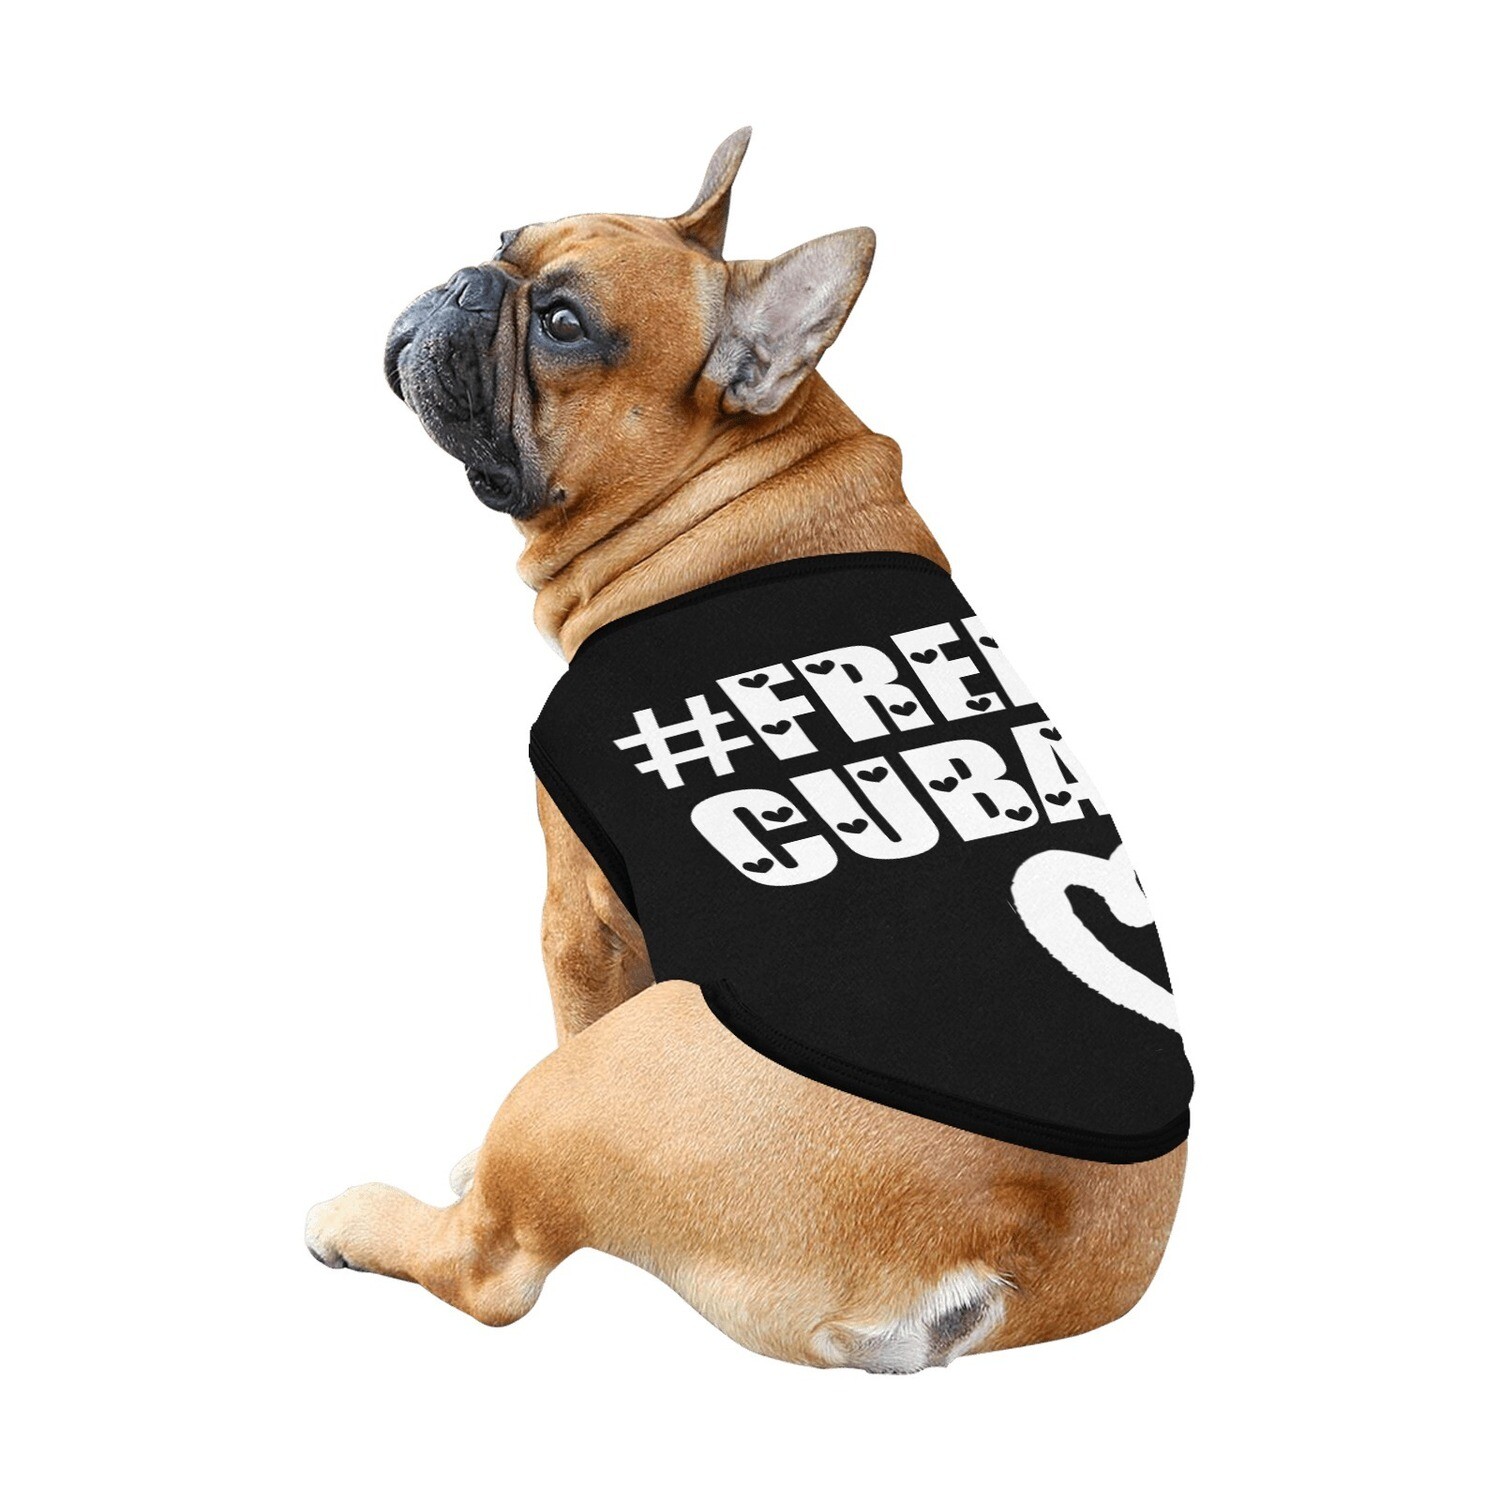 🐕🇨🇺 Free Cuba dog t-shirt, dog gift, dog tank top, dog shirt, dog clothes, gift, 7 sizes XS to 3XL, #freecuba, black